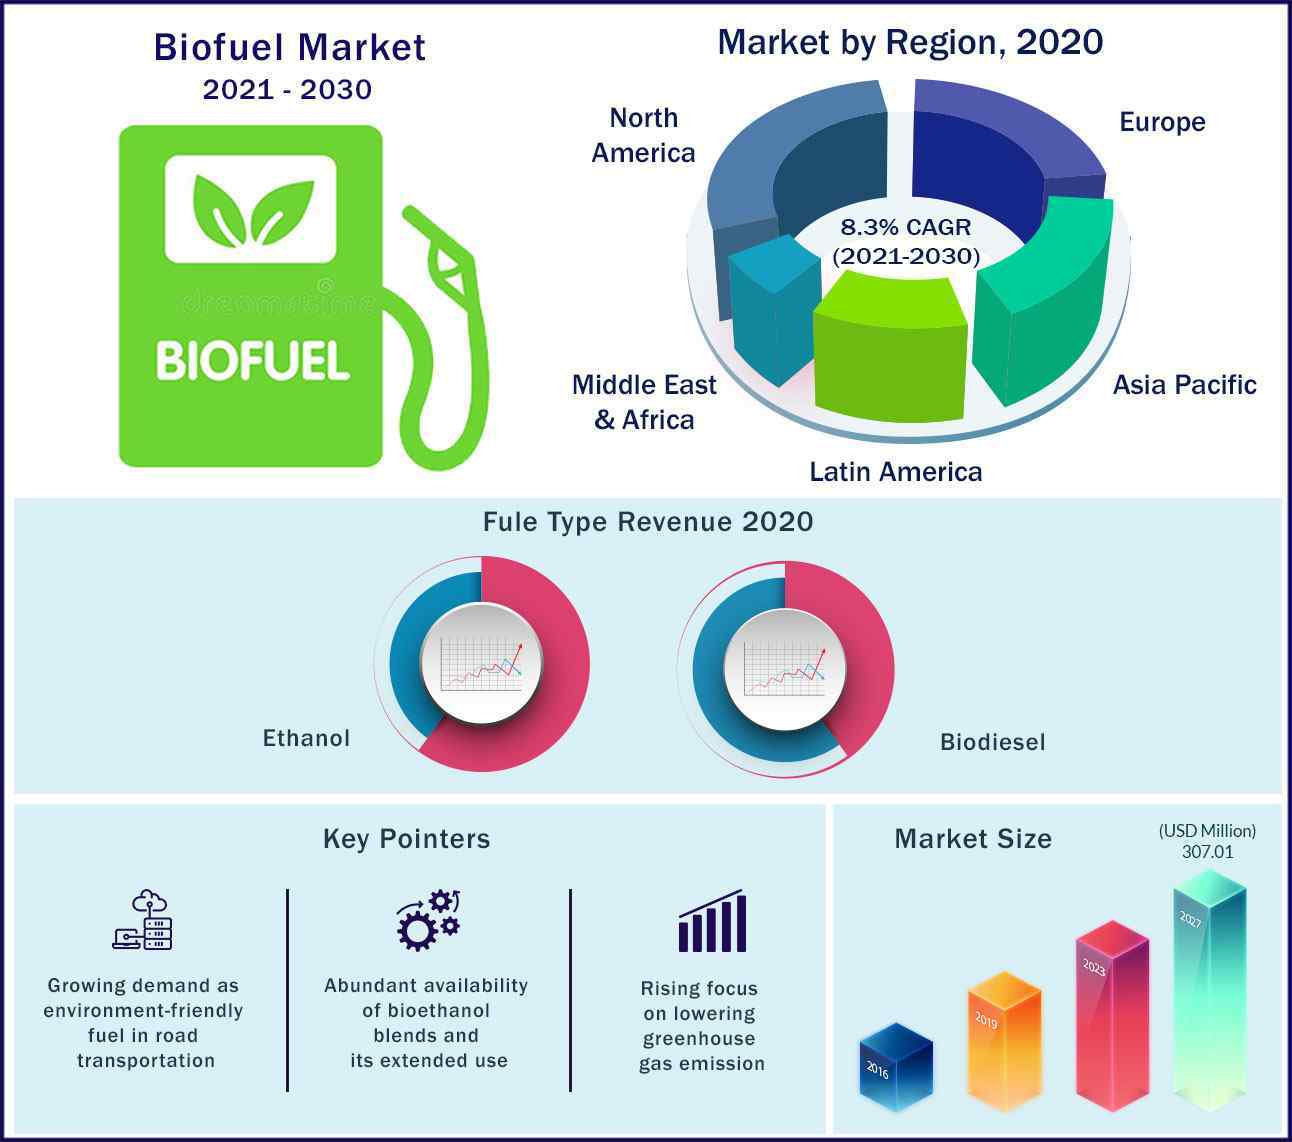 Global Biofuels Market 2021 to 2030